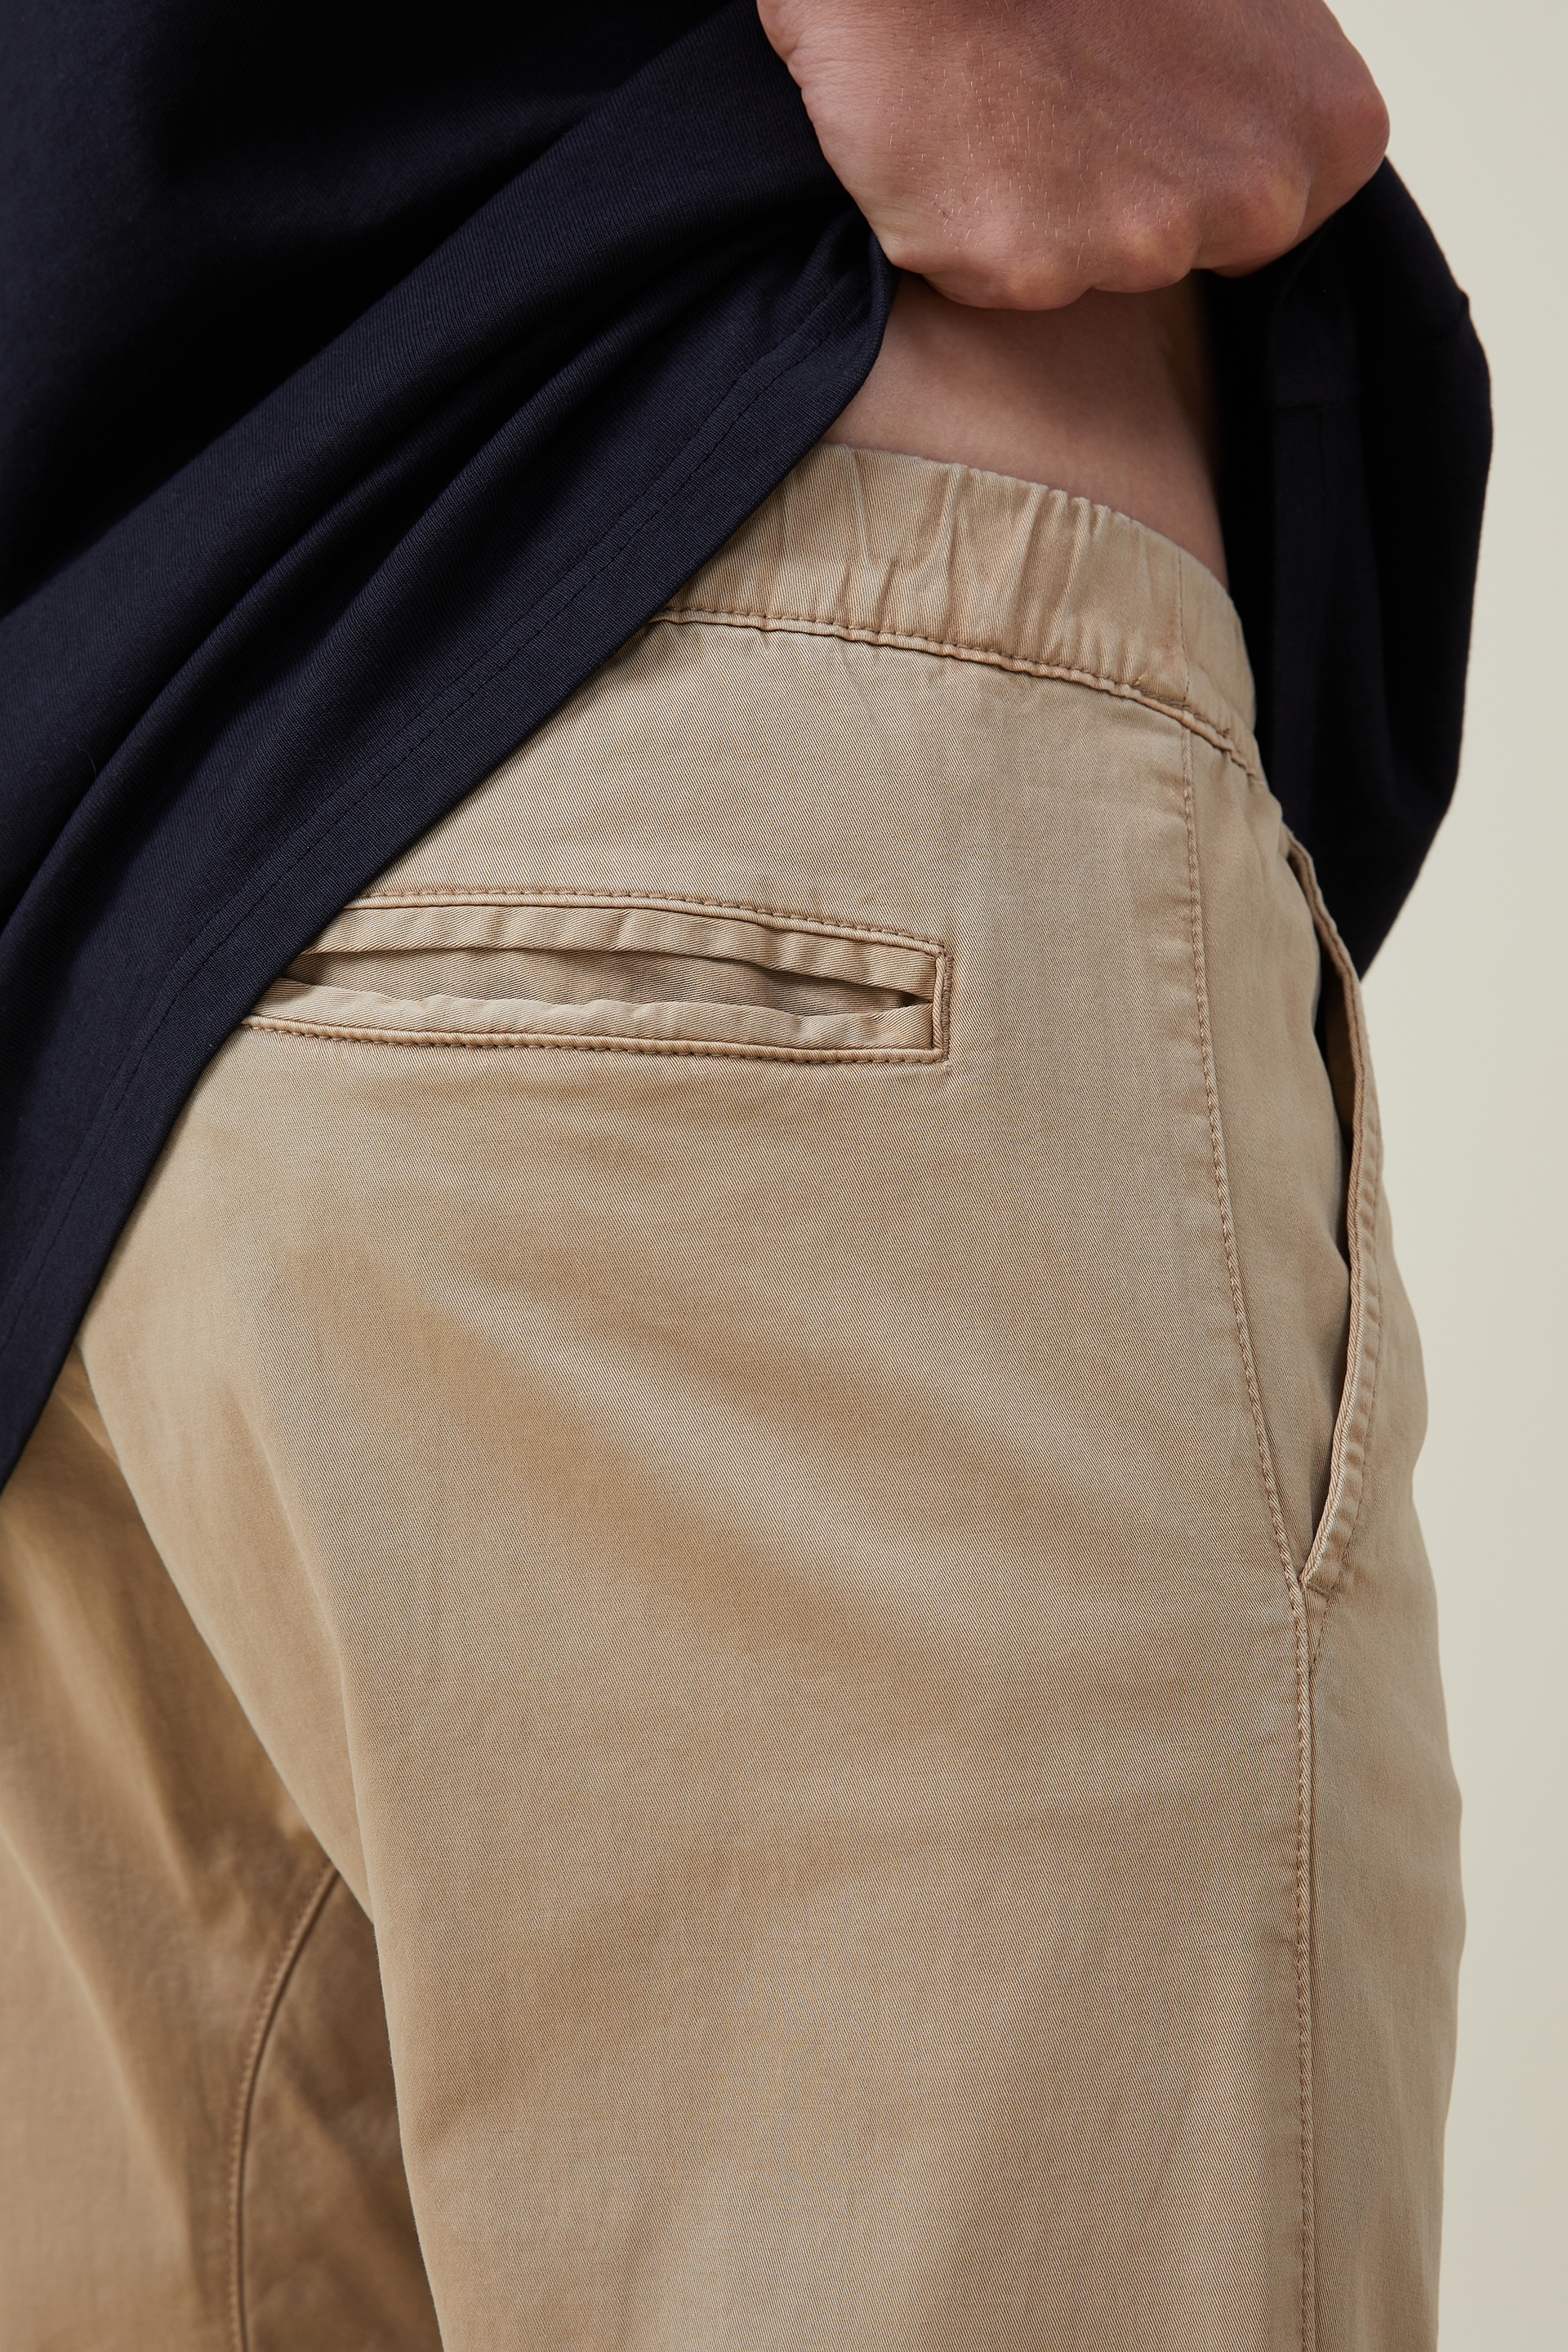 Drake Cuffed Pant | Men's Fashion | Cotton On